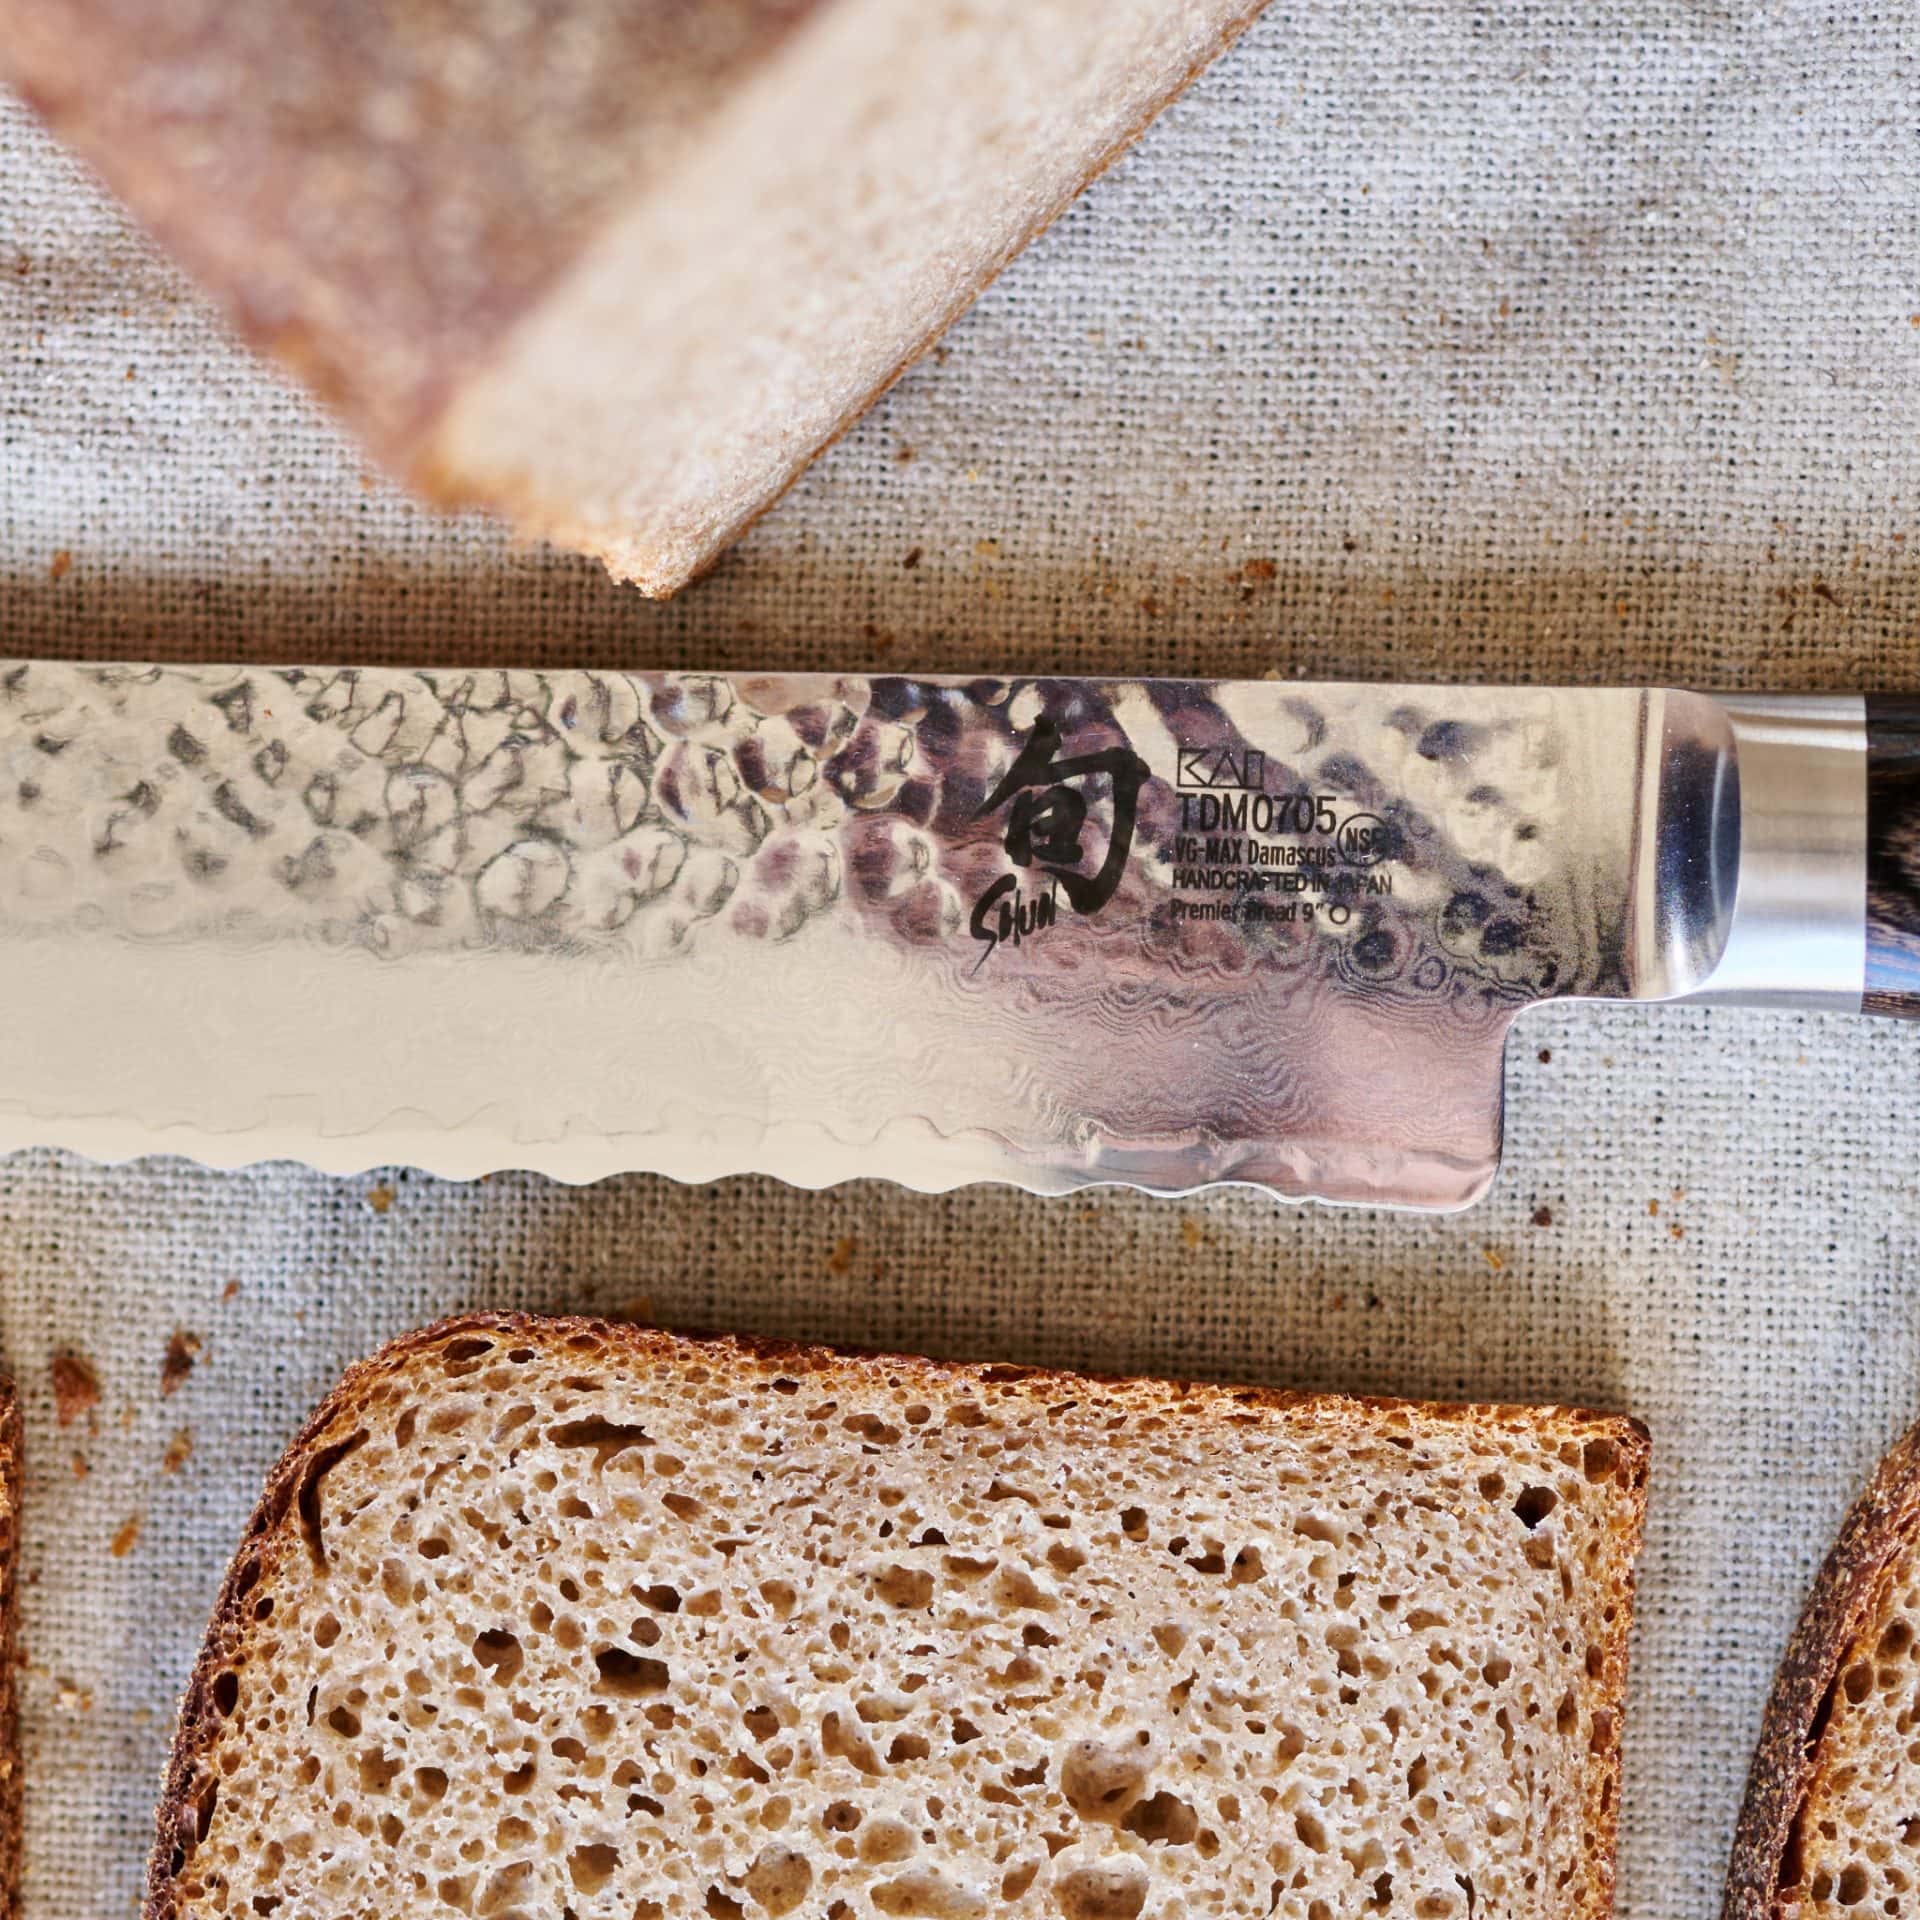 Serrated edge detail on bread knife